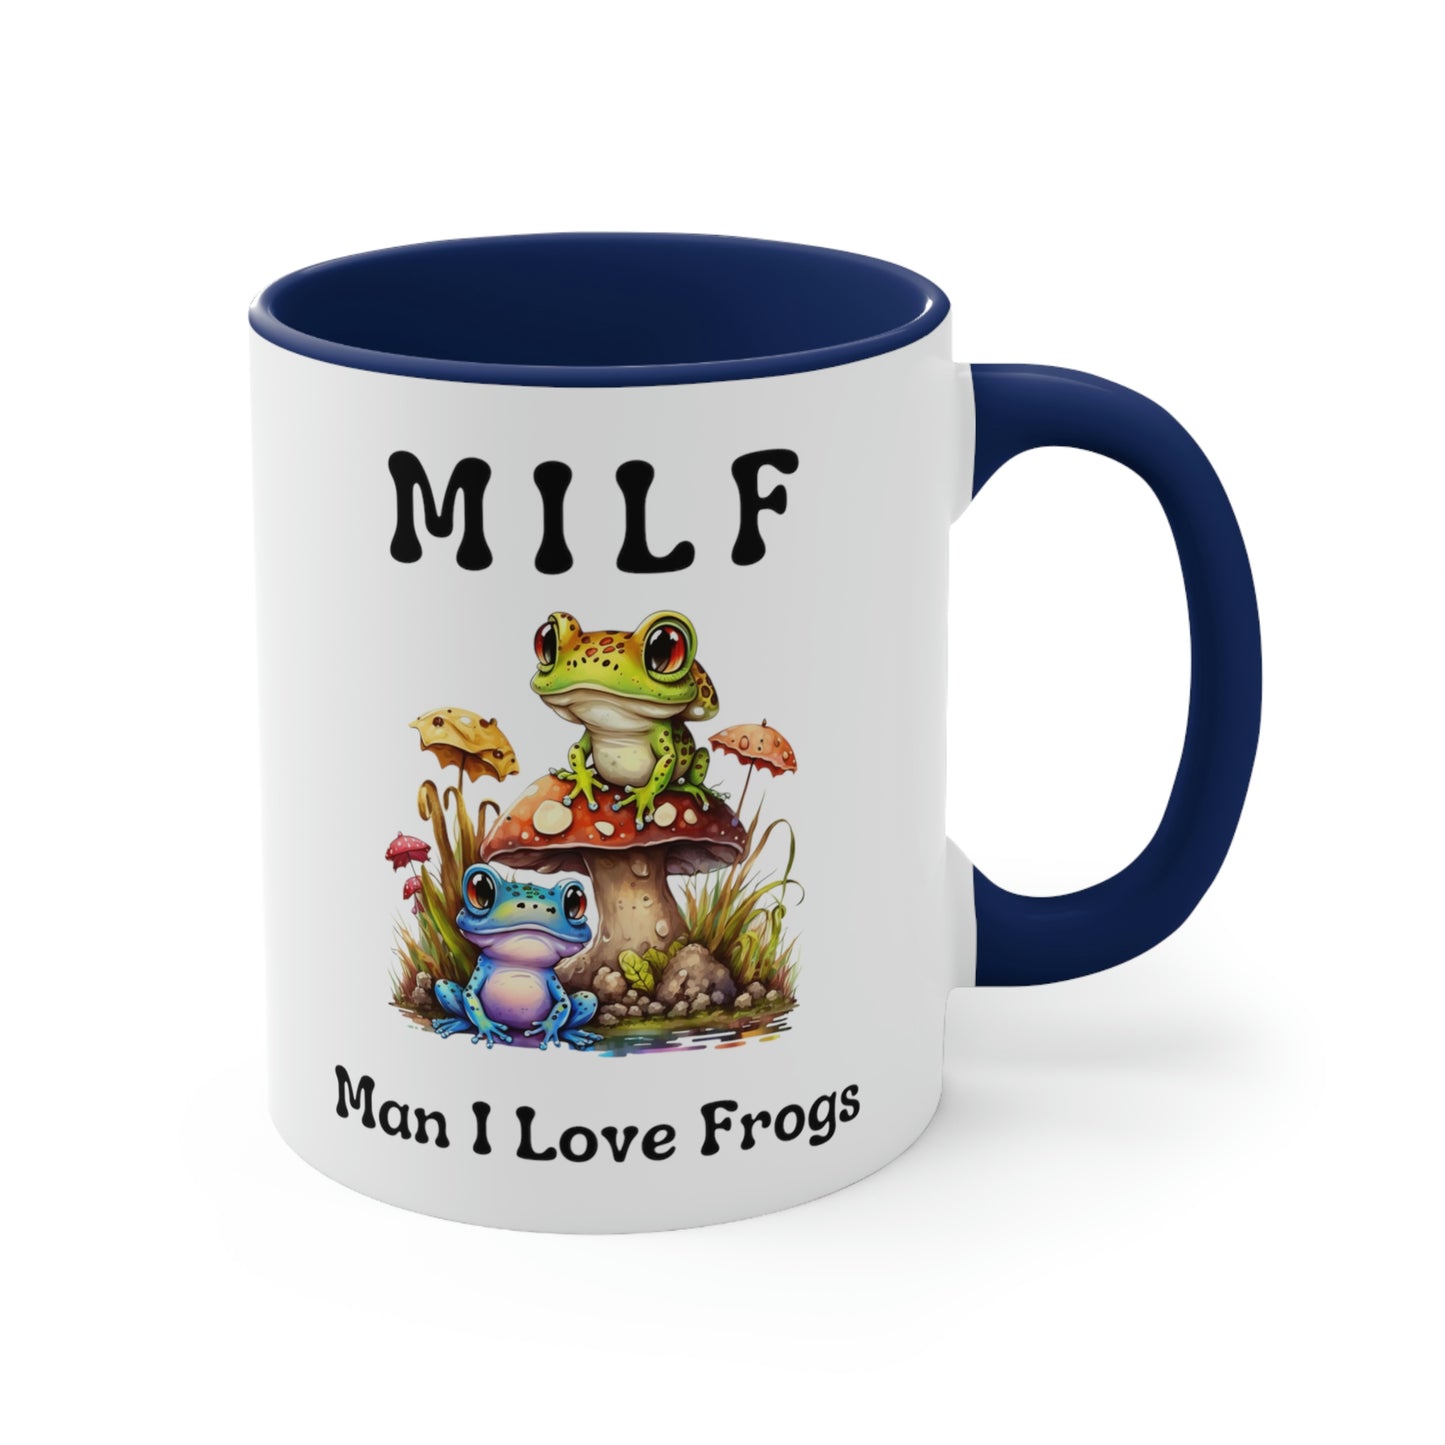 Funny Novelty Gift, Frog Coffee Mug, Man I Love Frogs MILF Ceramic Cup, Frog Lover Gift, Girlfriend Wife Gift Idea, Cottagecore Mushroom Mug